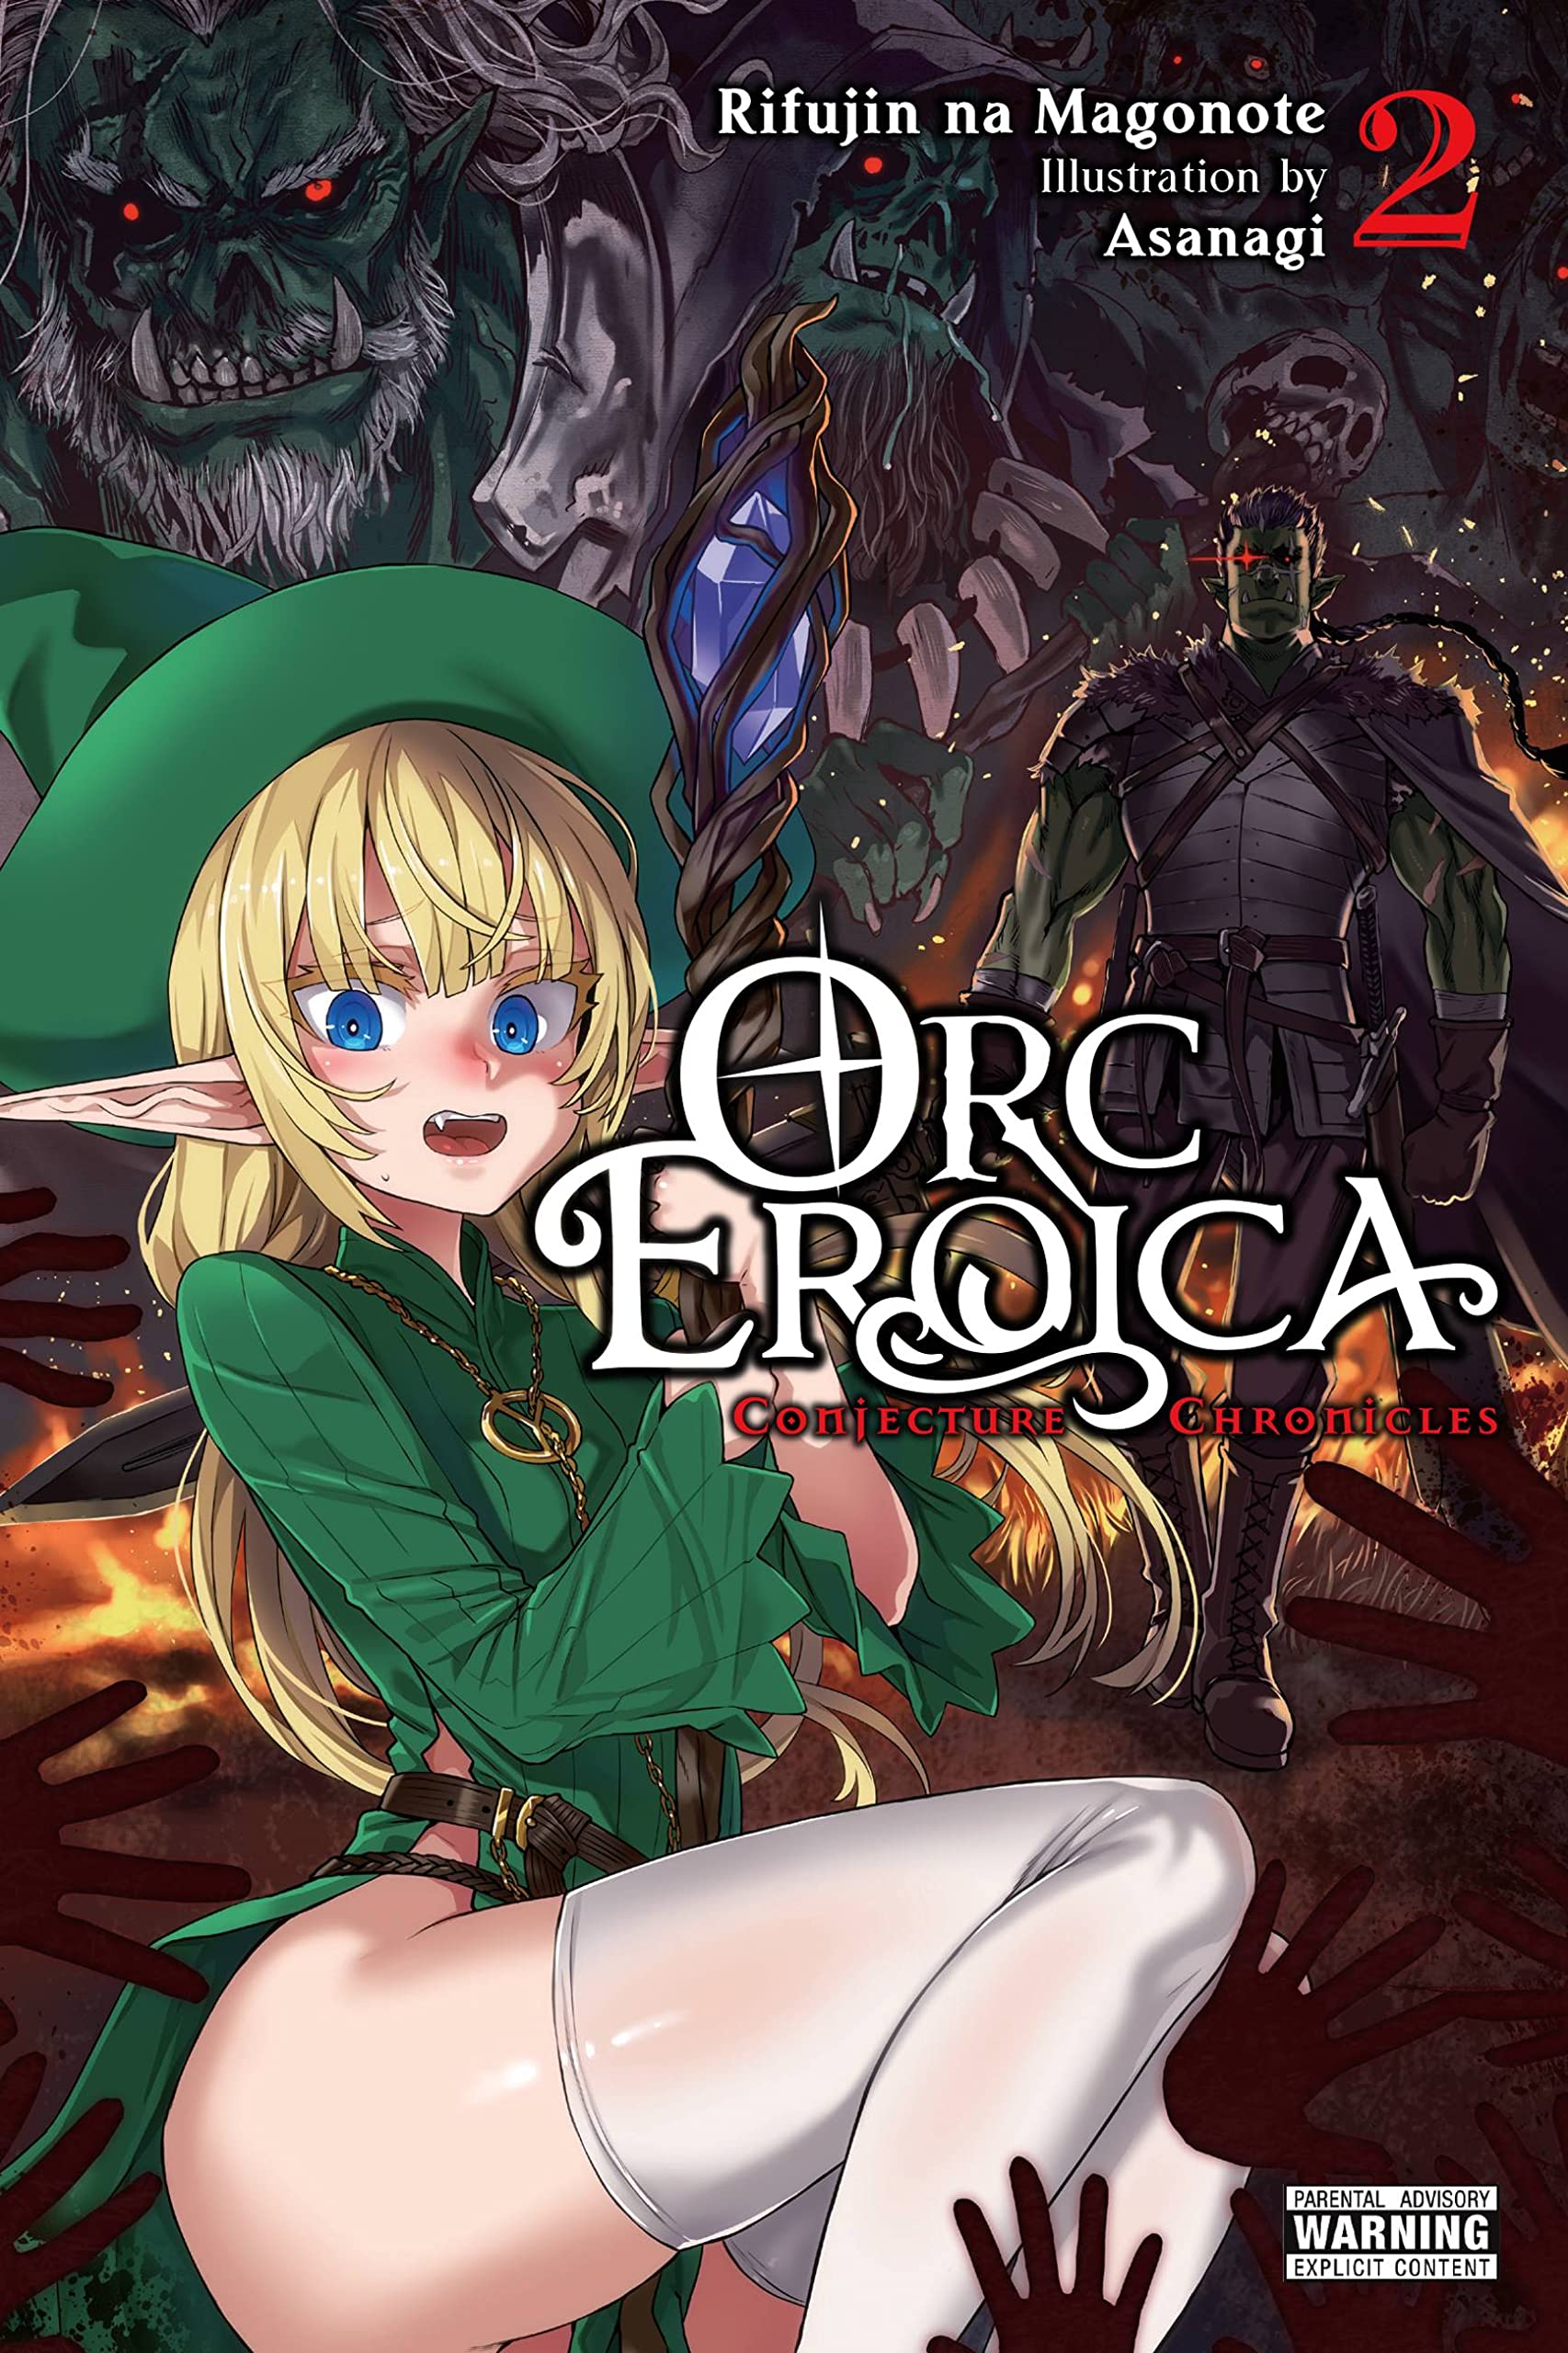 Orc Eroica Vol. 02 (Light Novel): Conjecture Chronicles